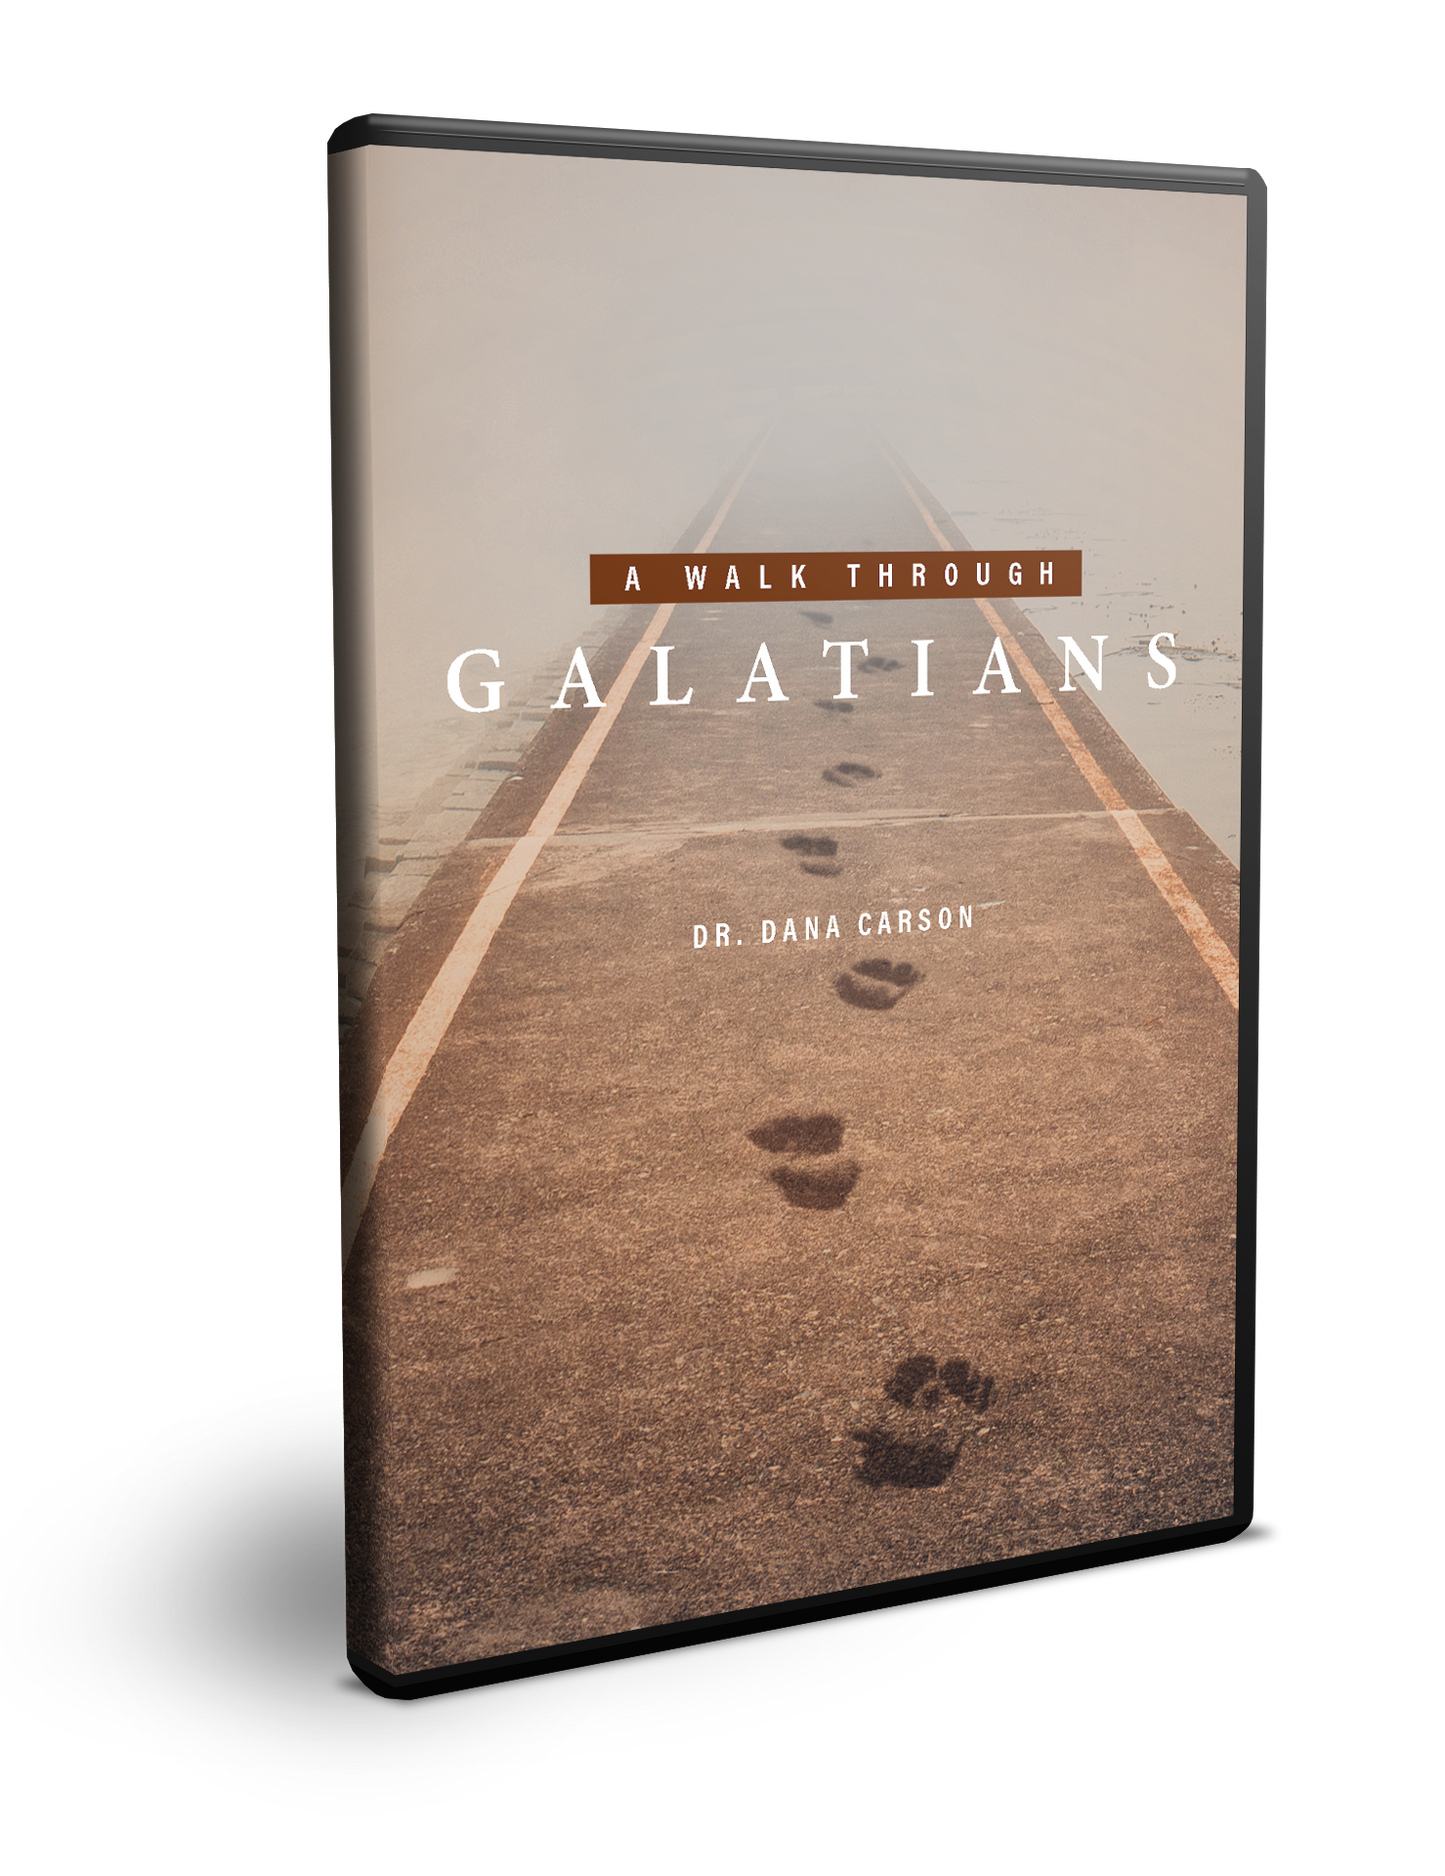 A Walk Through Galatians Volume 4 Series